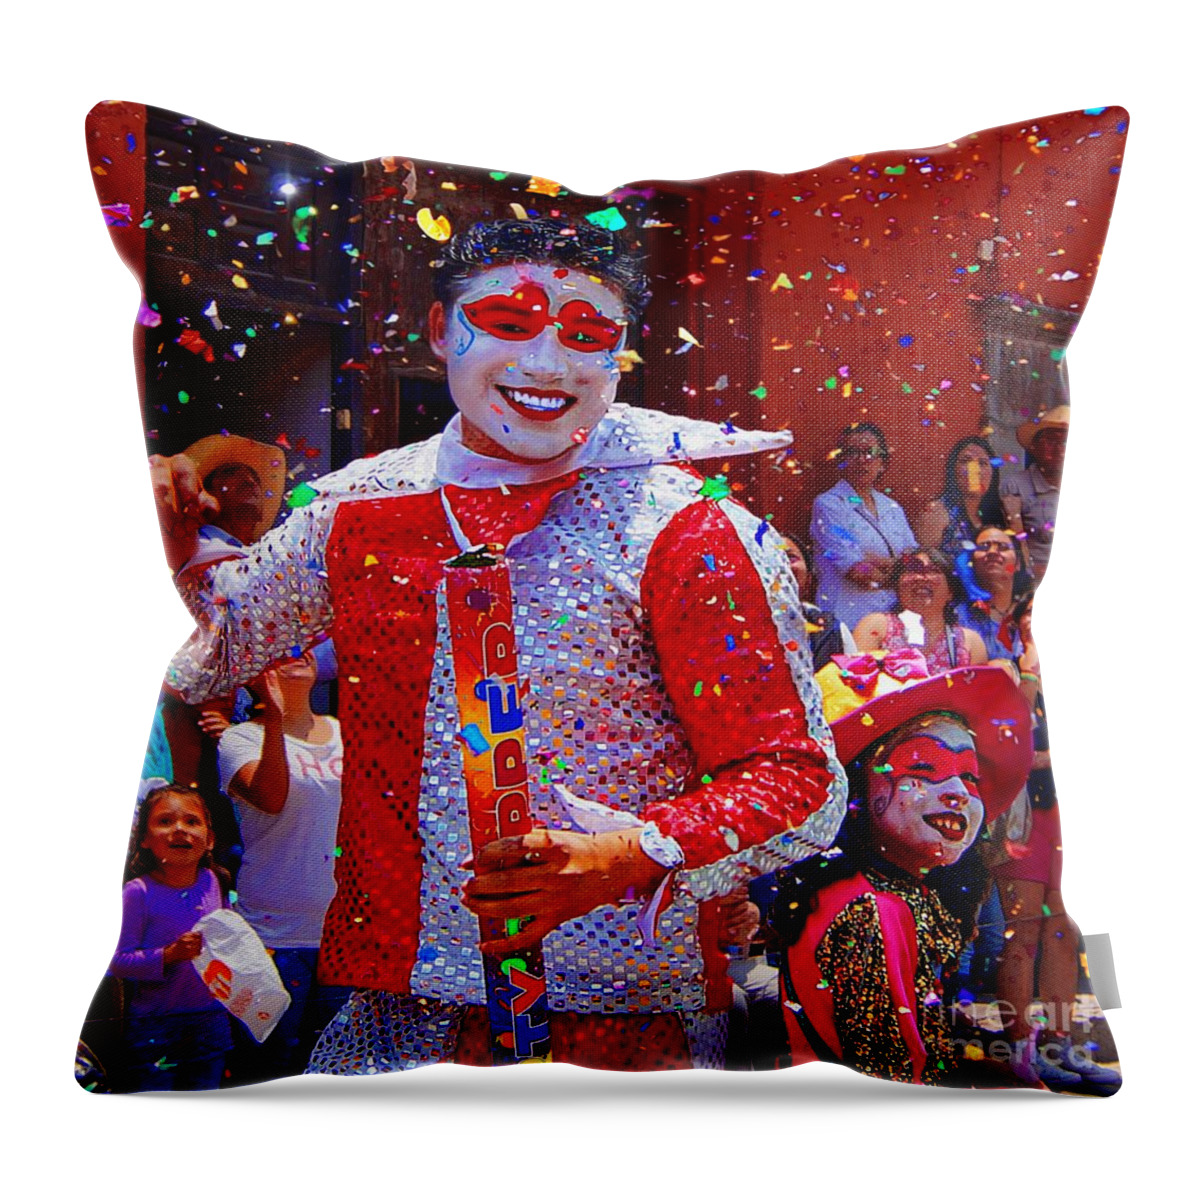 John+kolenberg Throw Pillow featuring the photograph Carnival Man At The Day Of The Crazies Parade by John Kolenberg